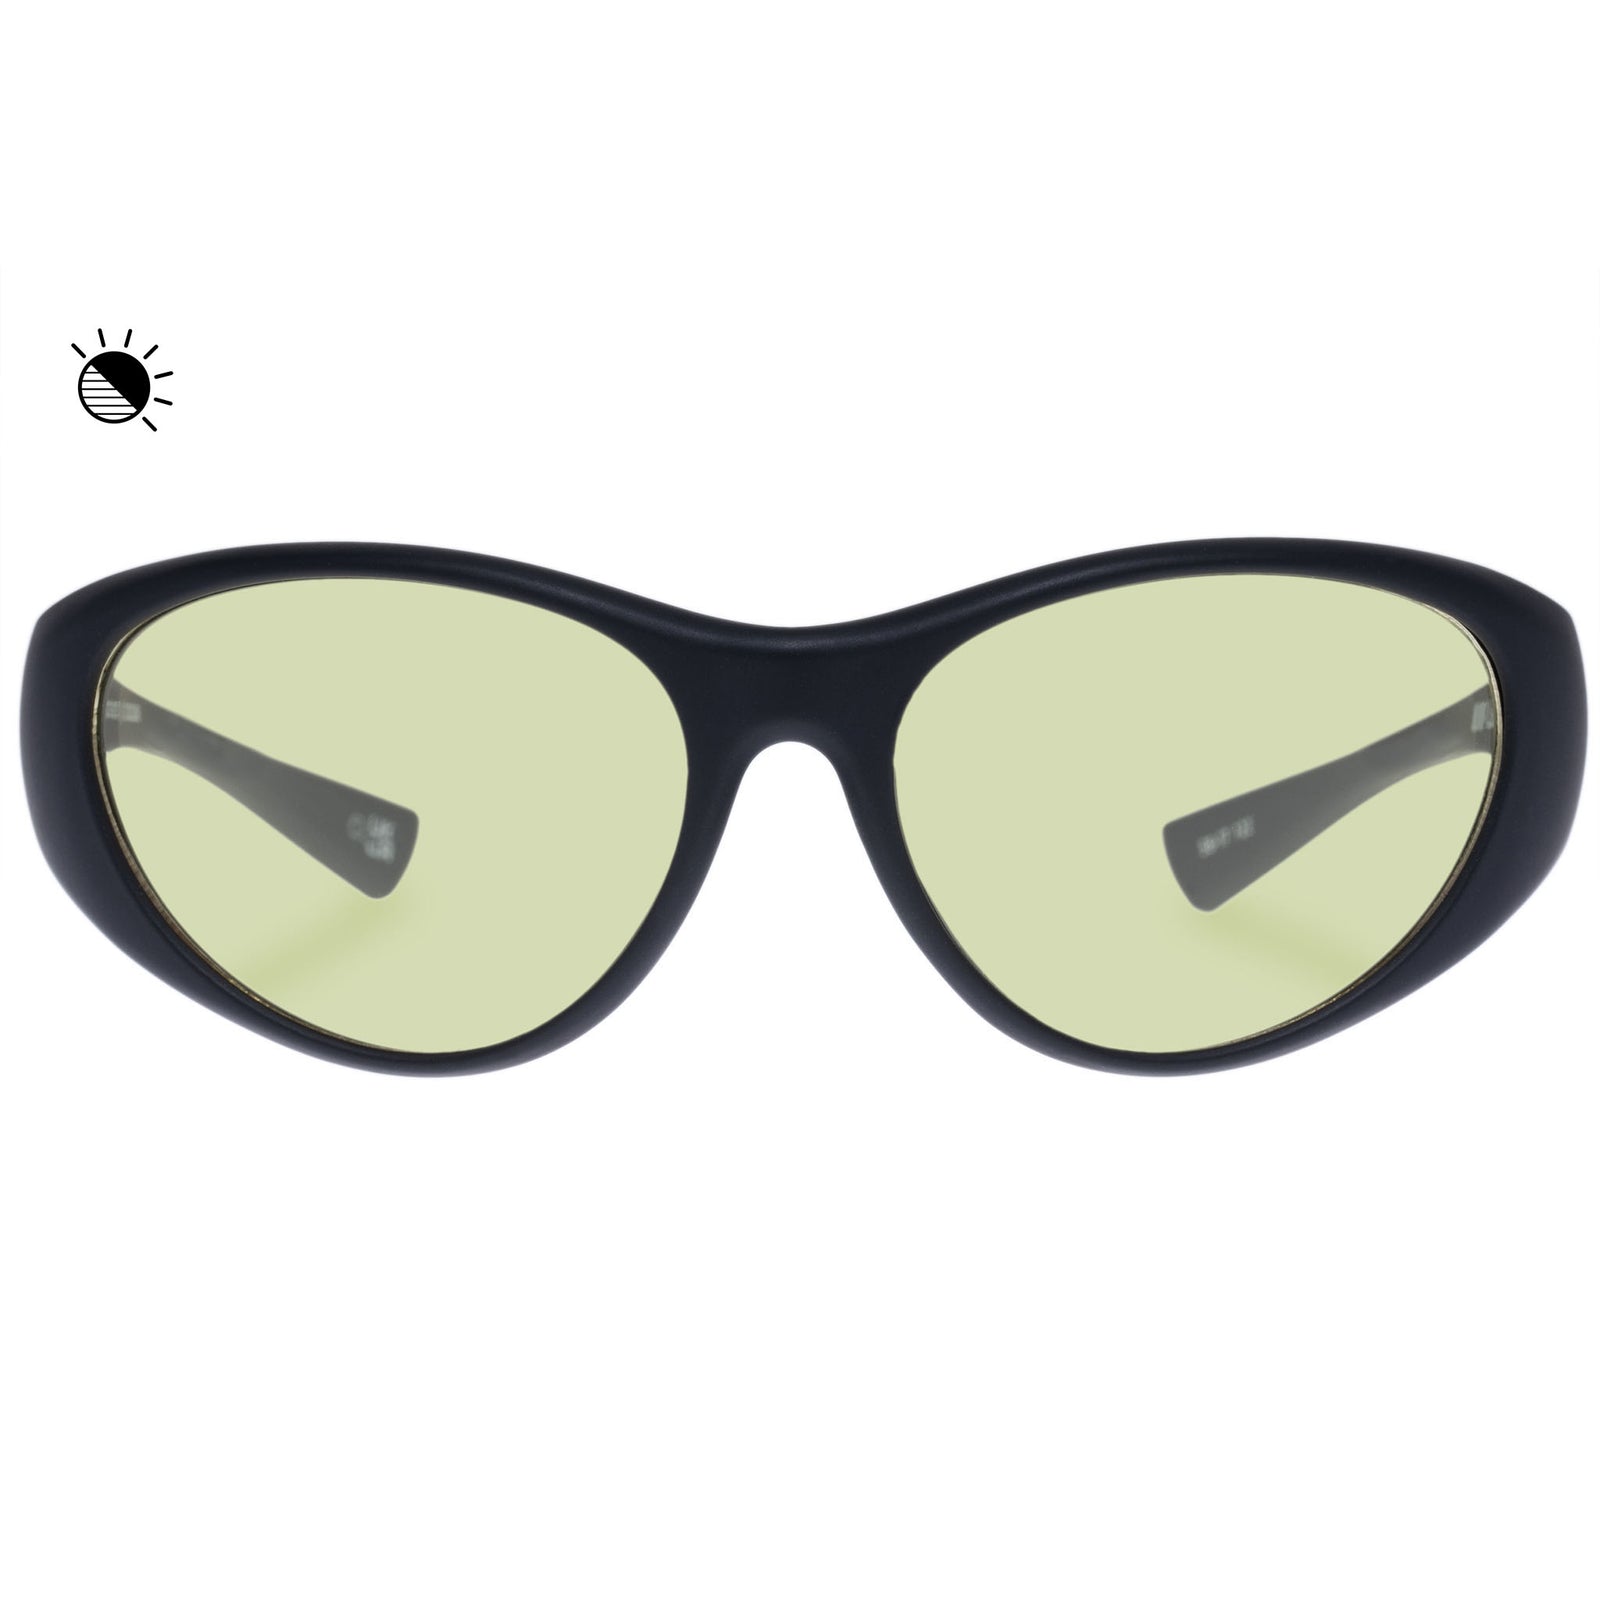 Le Specs - Dotcom Transition Lenses, Oval Sunglasses, Matte Black, Large